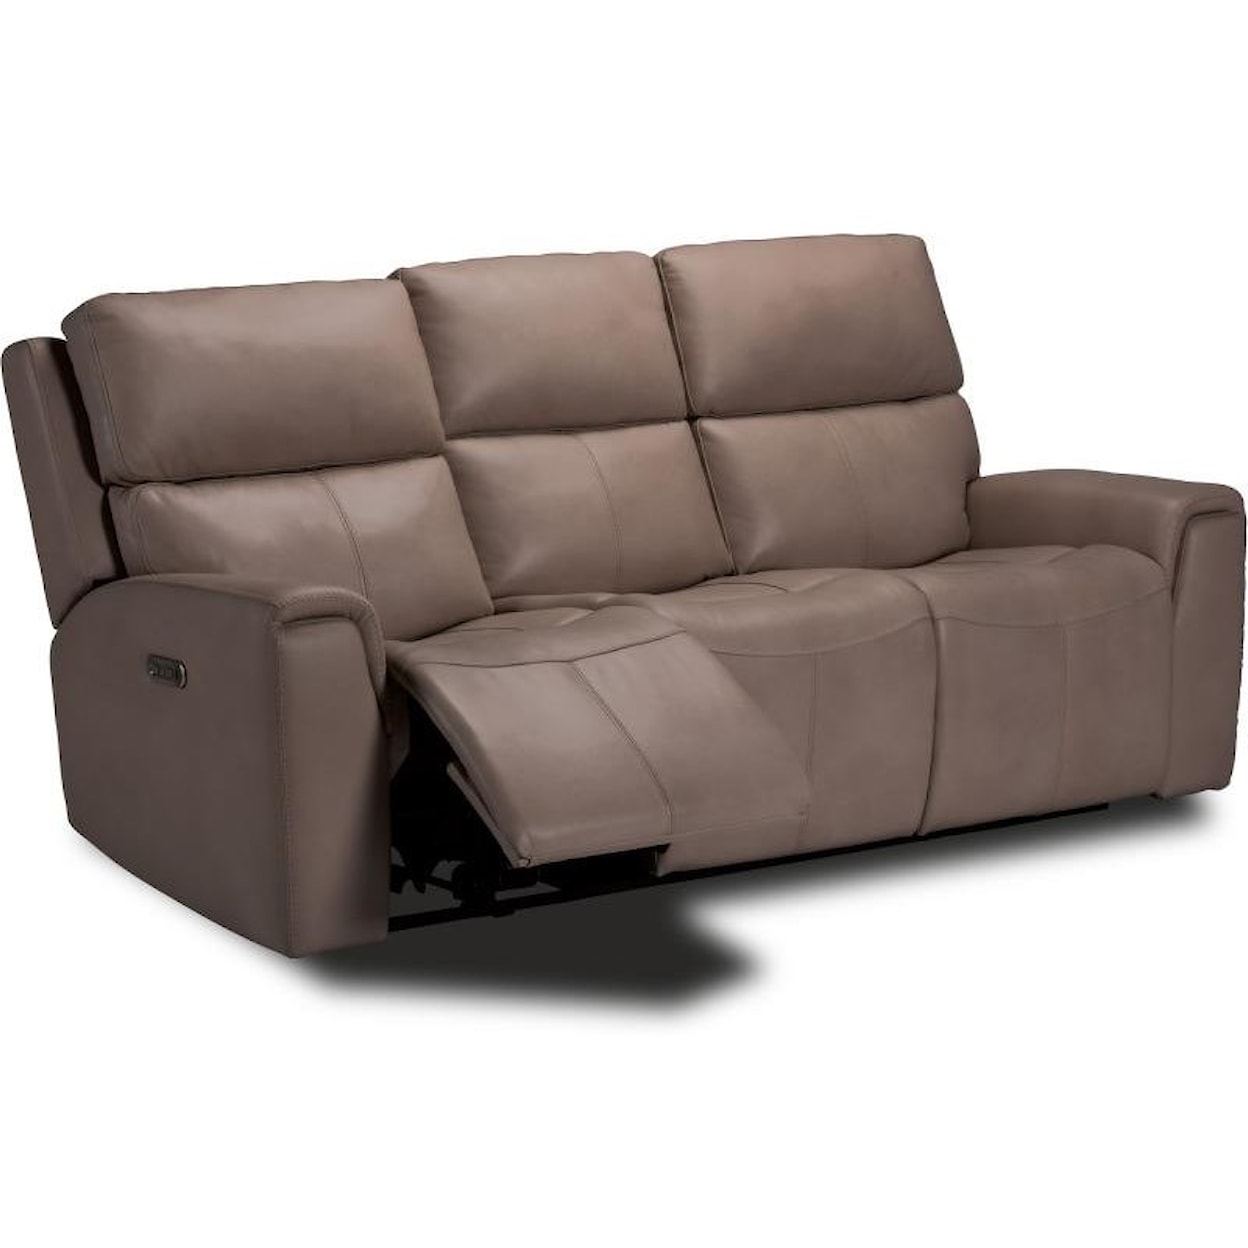 Flexsteel 1819 sofa